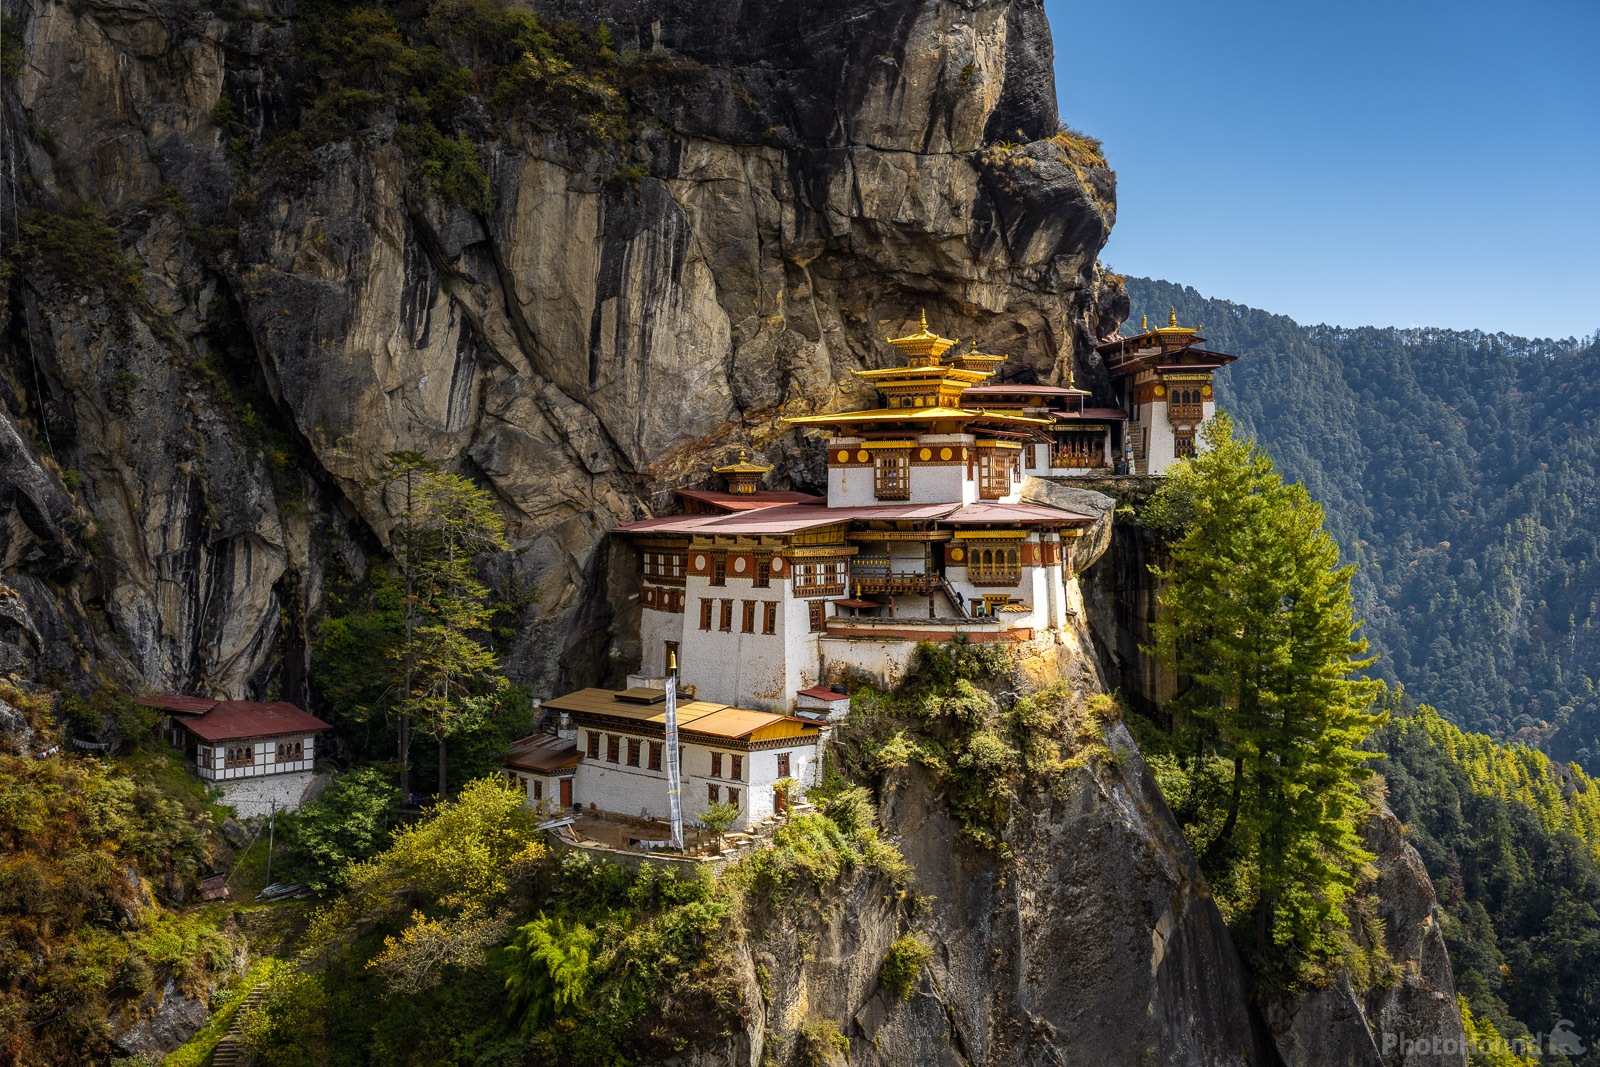 Bhutan photo locations